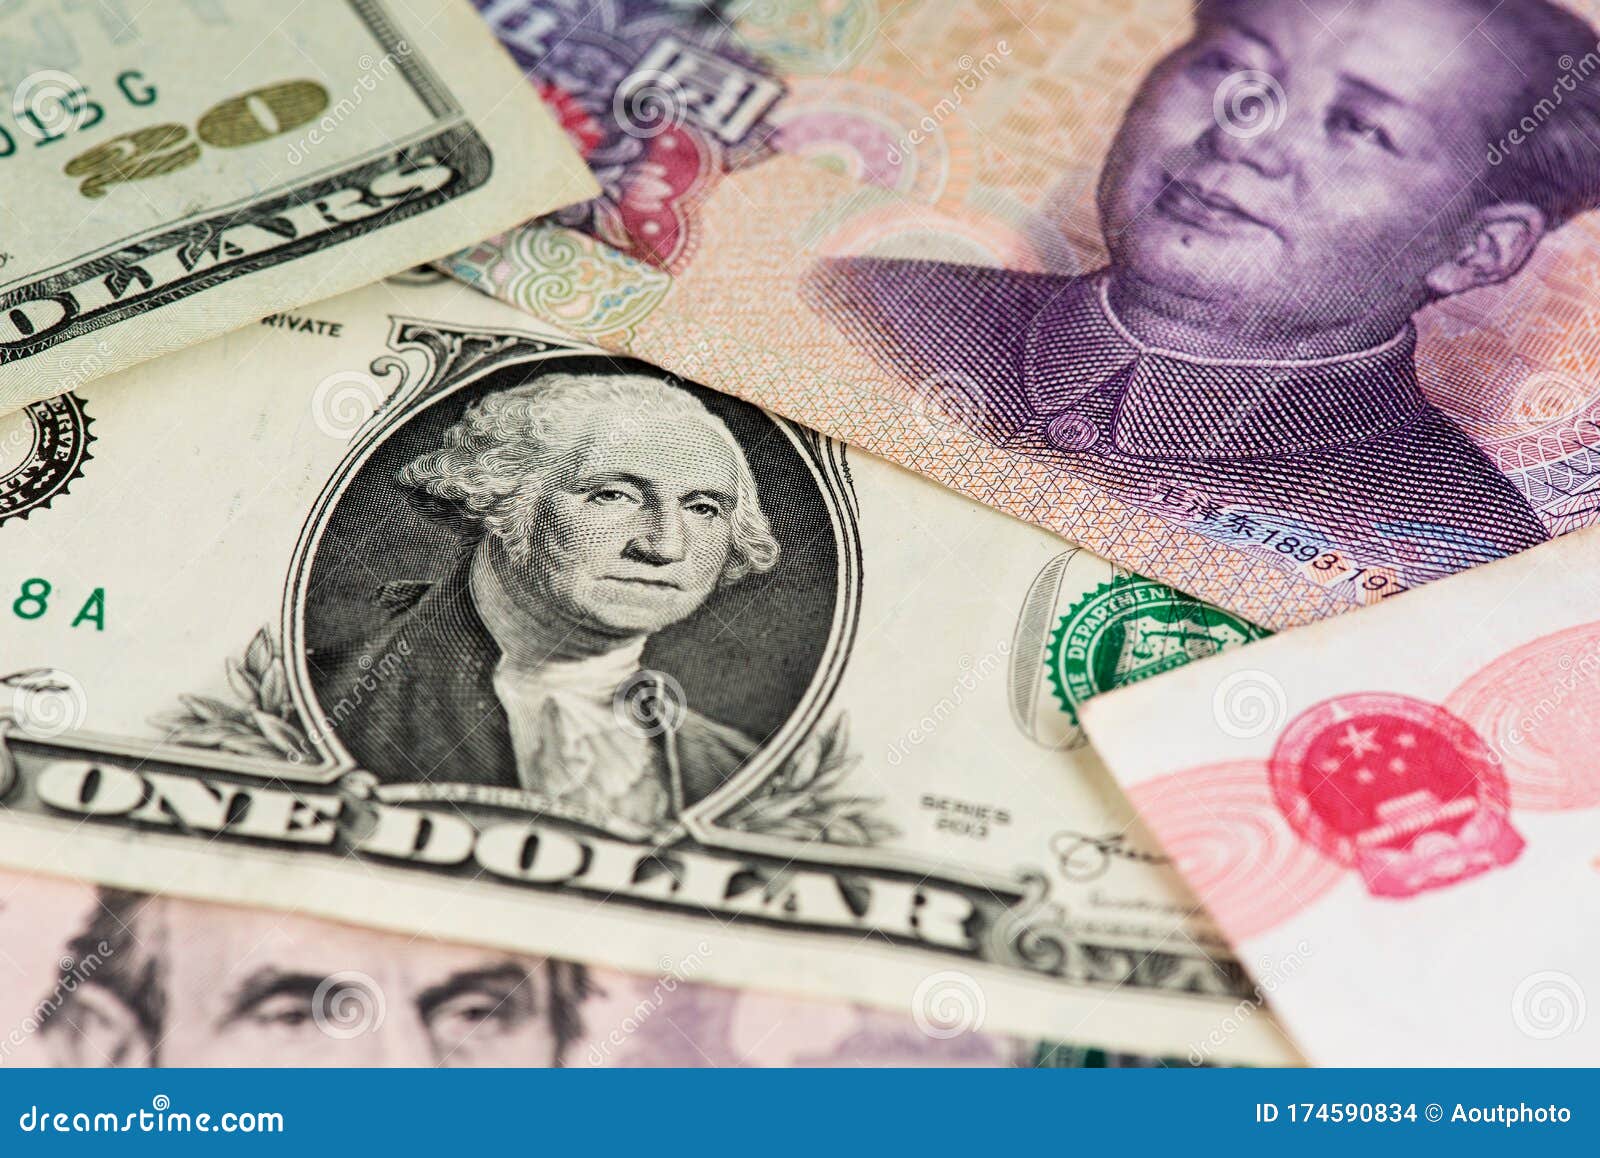 Тысяча долларов в юанях. Юань, доллар, США, Китай. Юаньские купюры. Us Dollar vs Chinese Yuan. China currency vs Dollar.